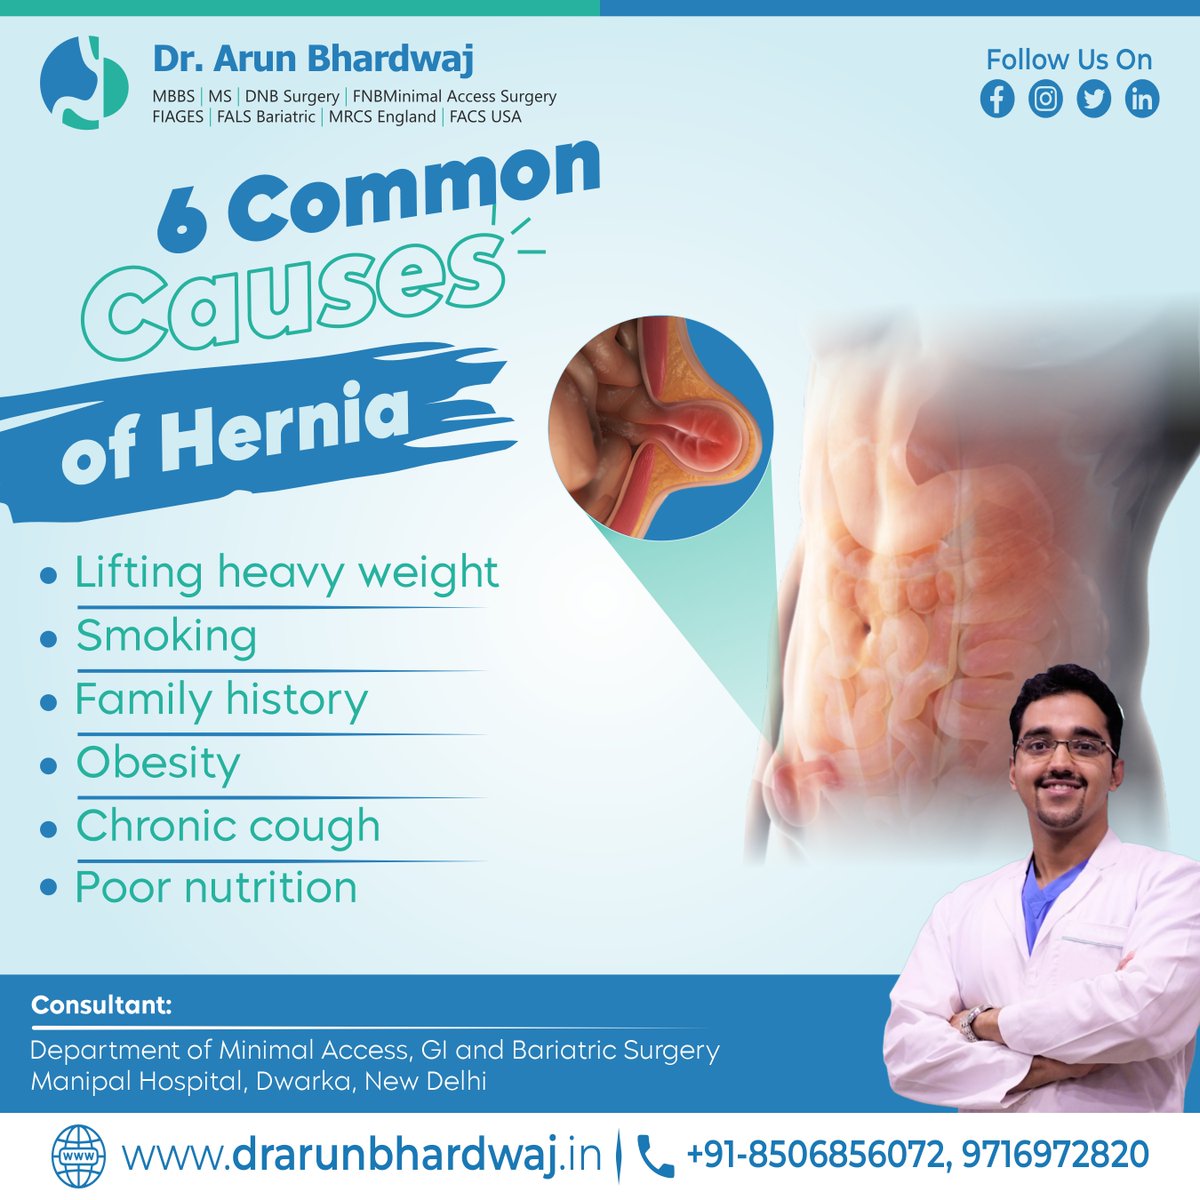 6 Common Causes of Hernia. For a consultation, Call📲 8506856072, 9716972820 also visit💻 drarunbhardwaj.com
#DrArunBhardwaj #laparoscopicsurgeon #bariatricsugeon #laparoscopic #LaparoscopicSurgery #laparoscopicsurgery #drarunbhardwaj #hérnia #HerniaRepair #inguinal